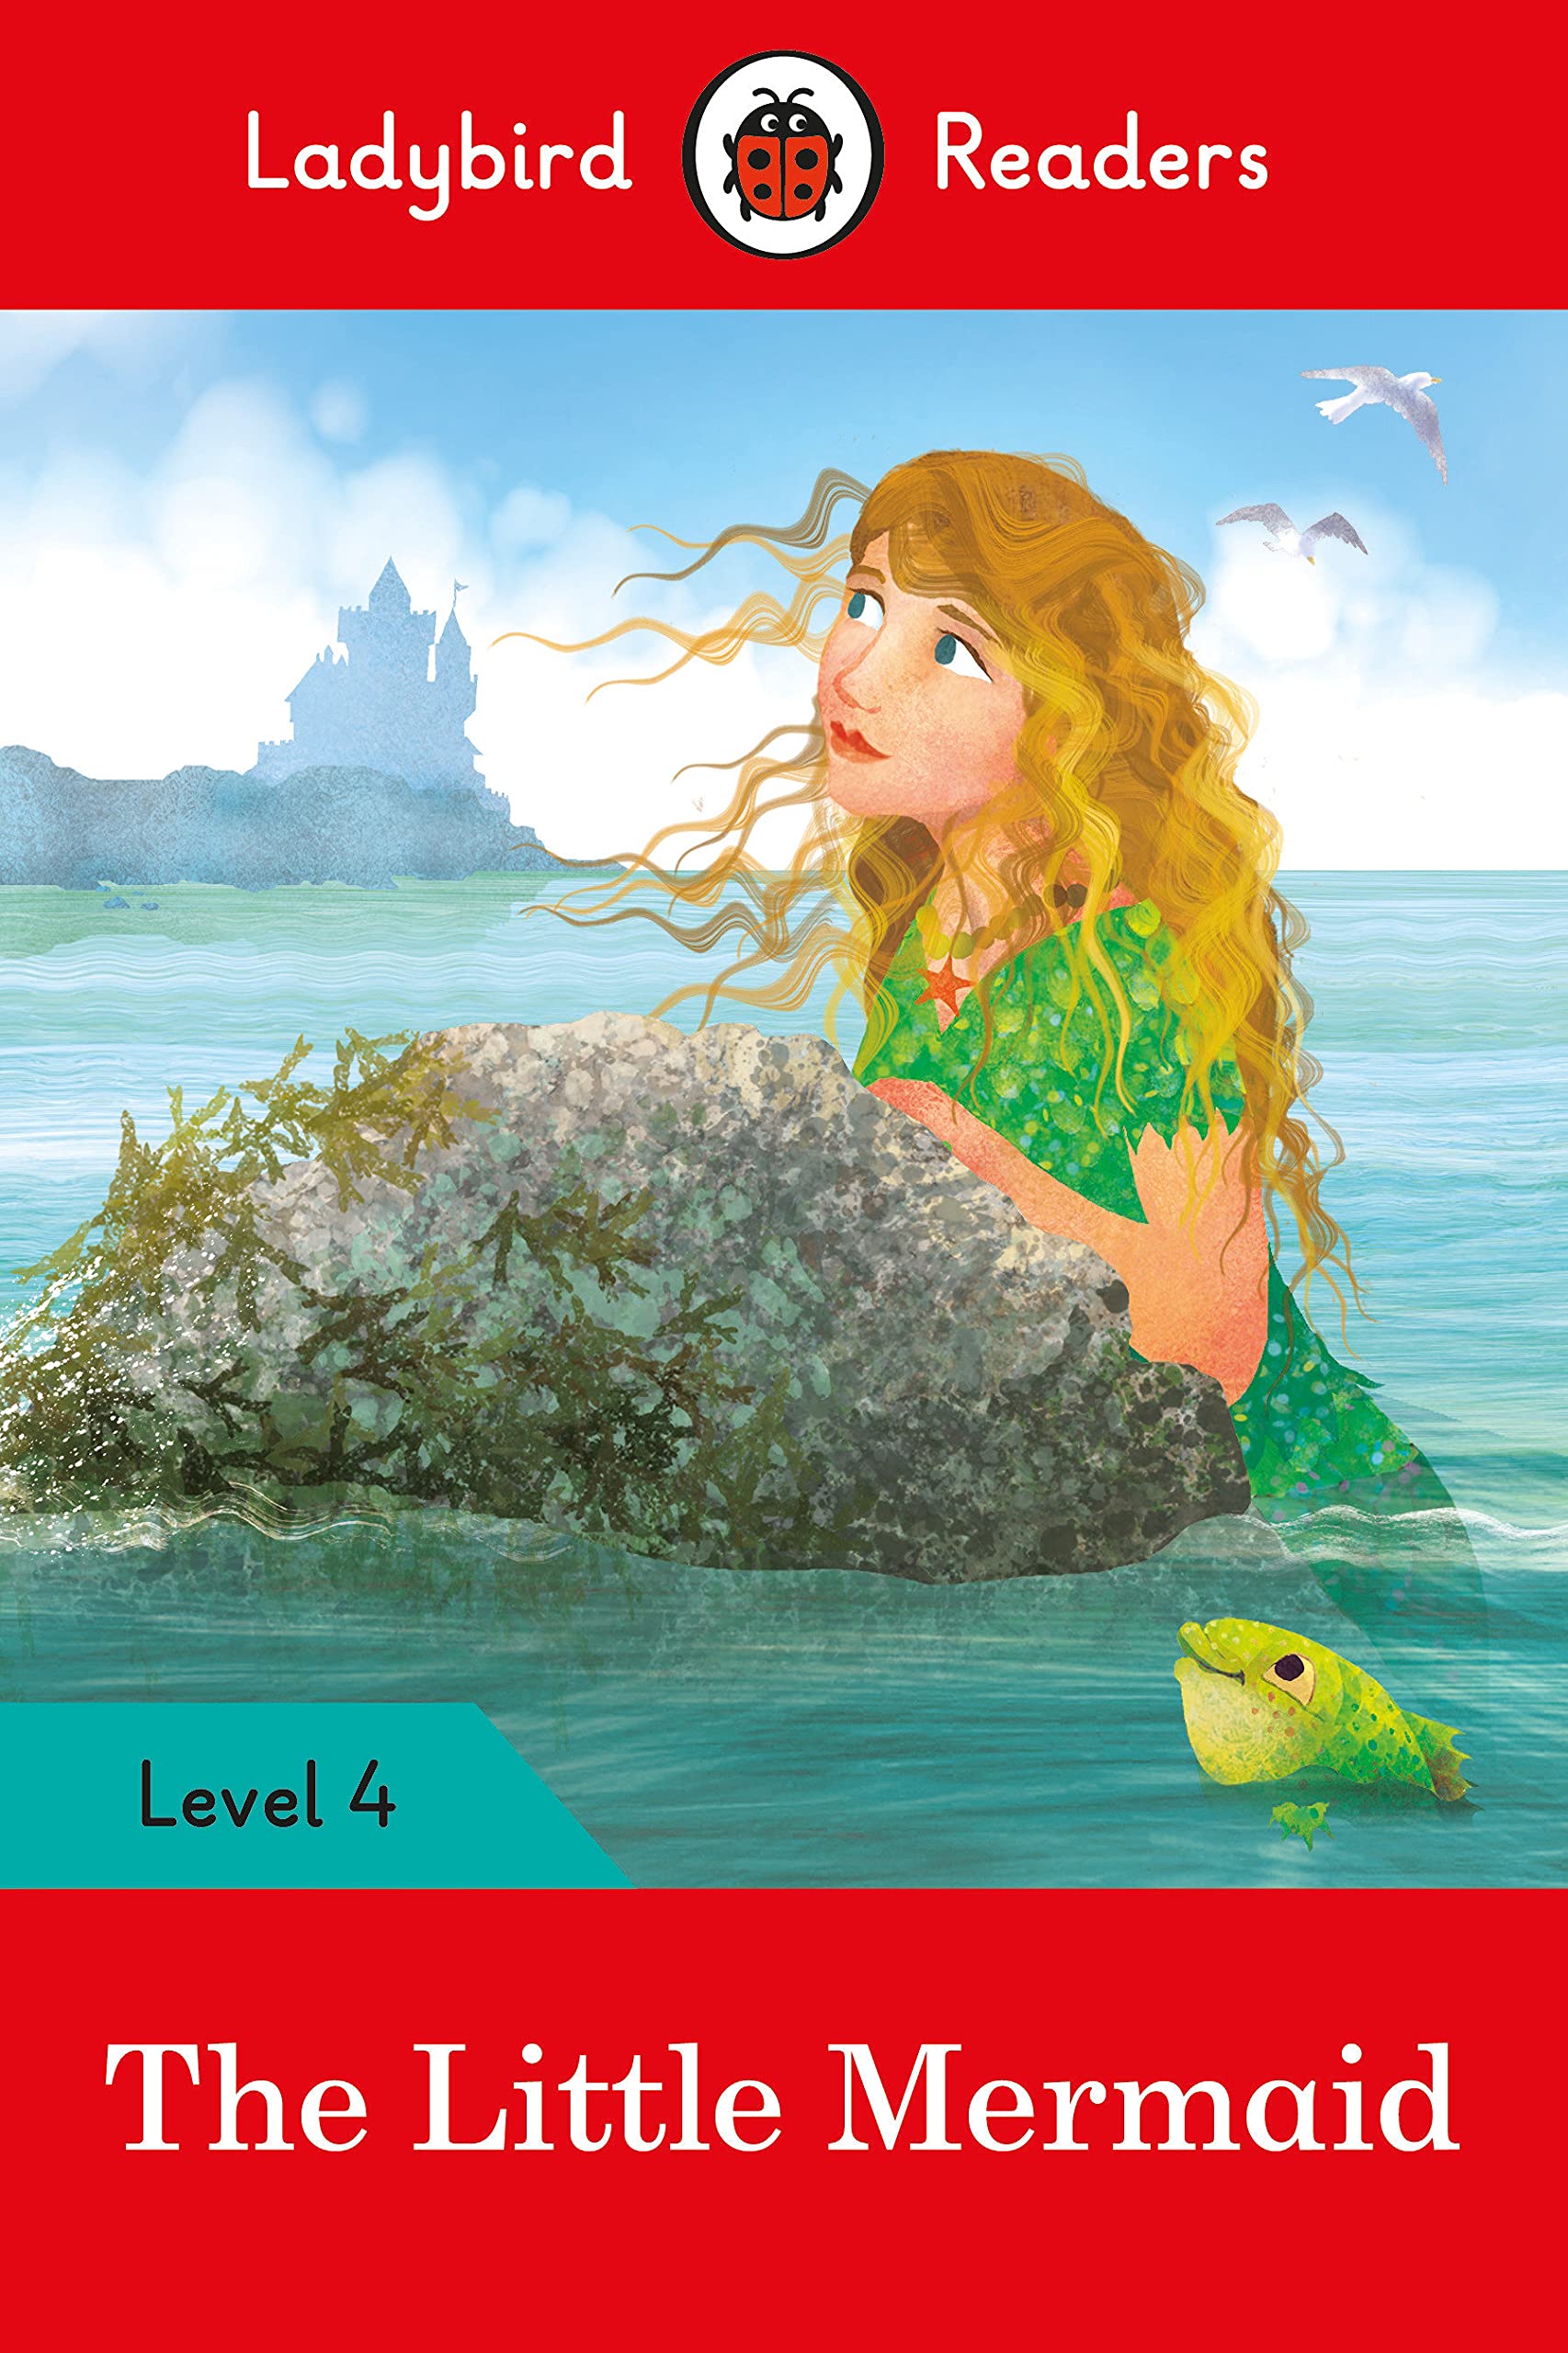 Ladybird readers level 4 - the little mermaid